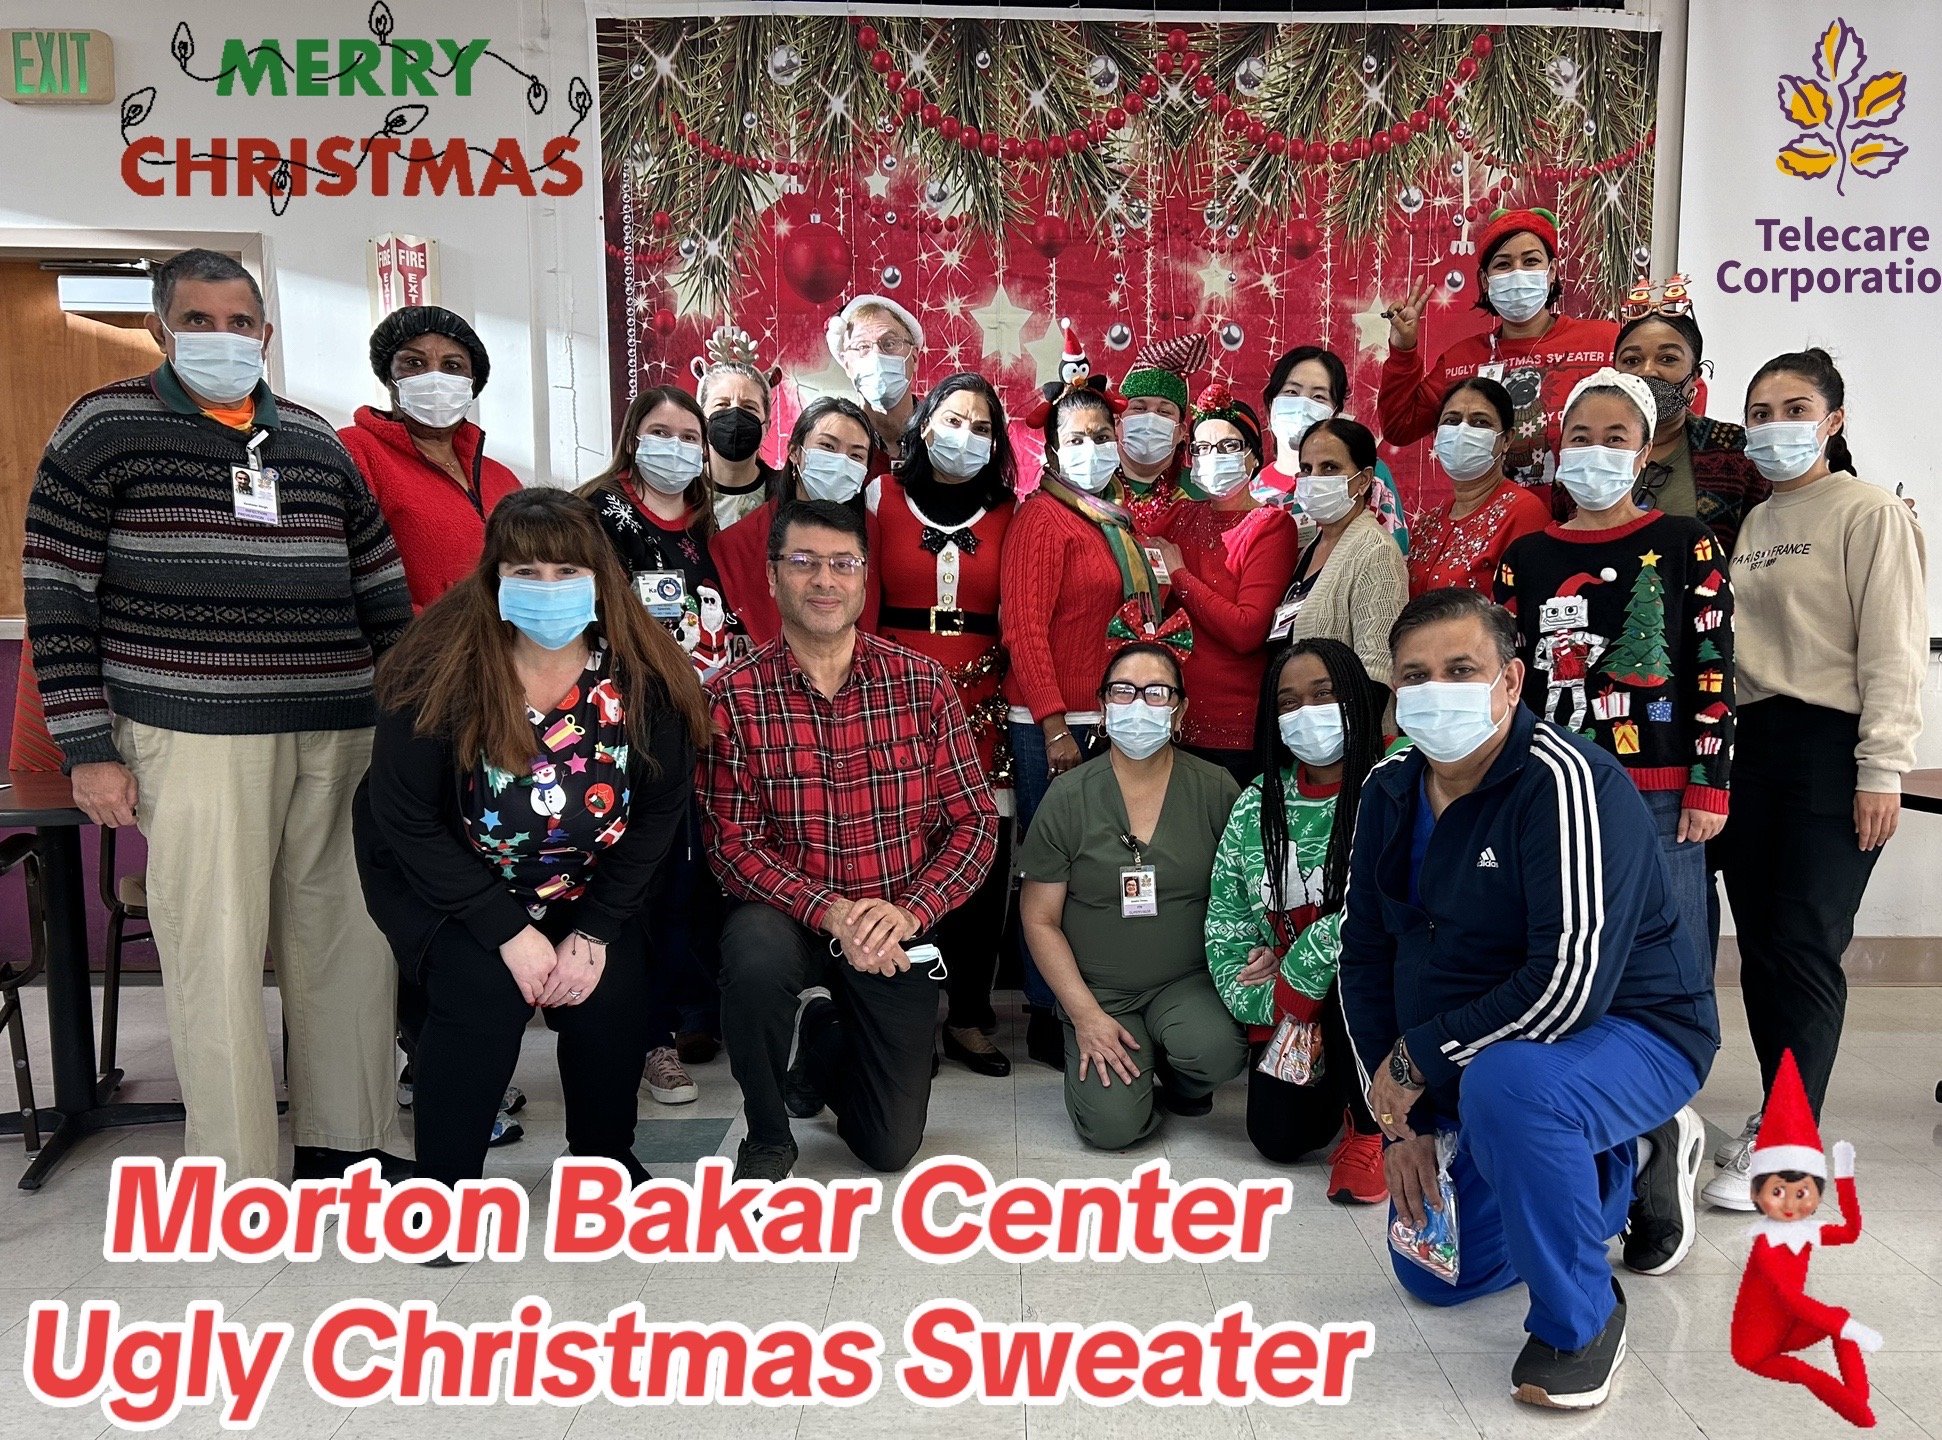 Morton Bakar Center